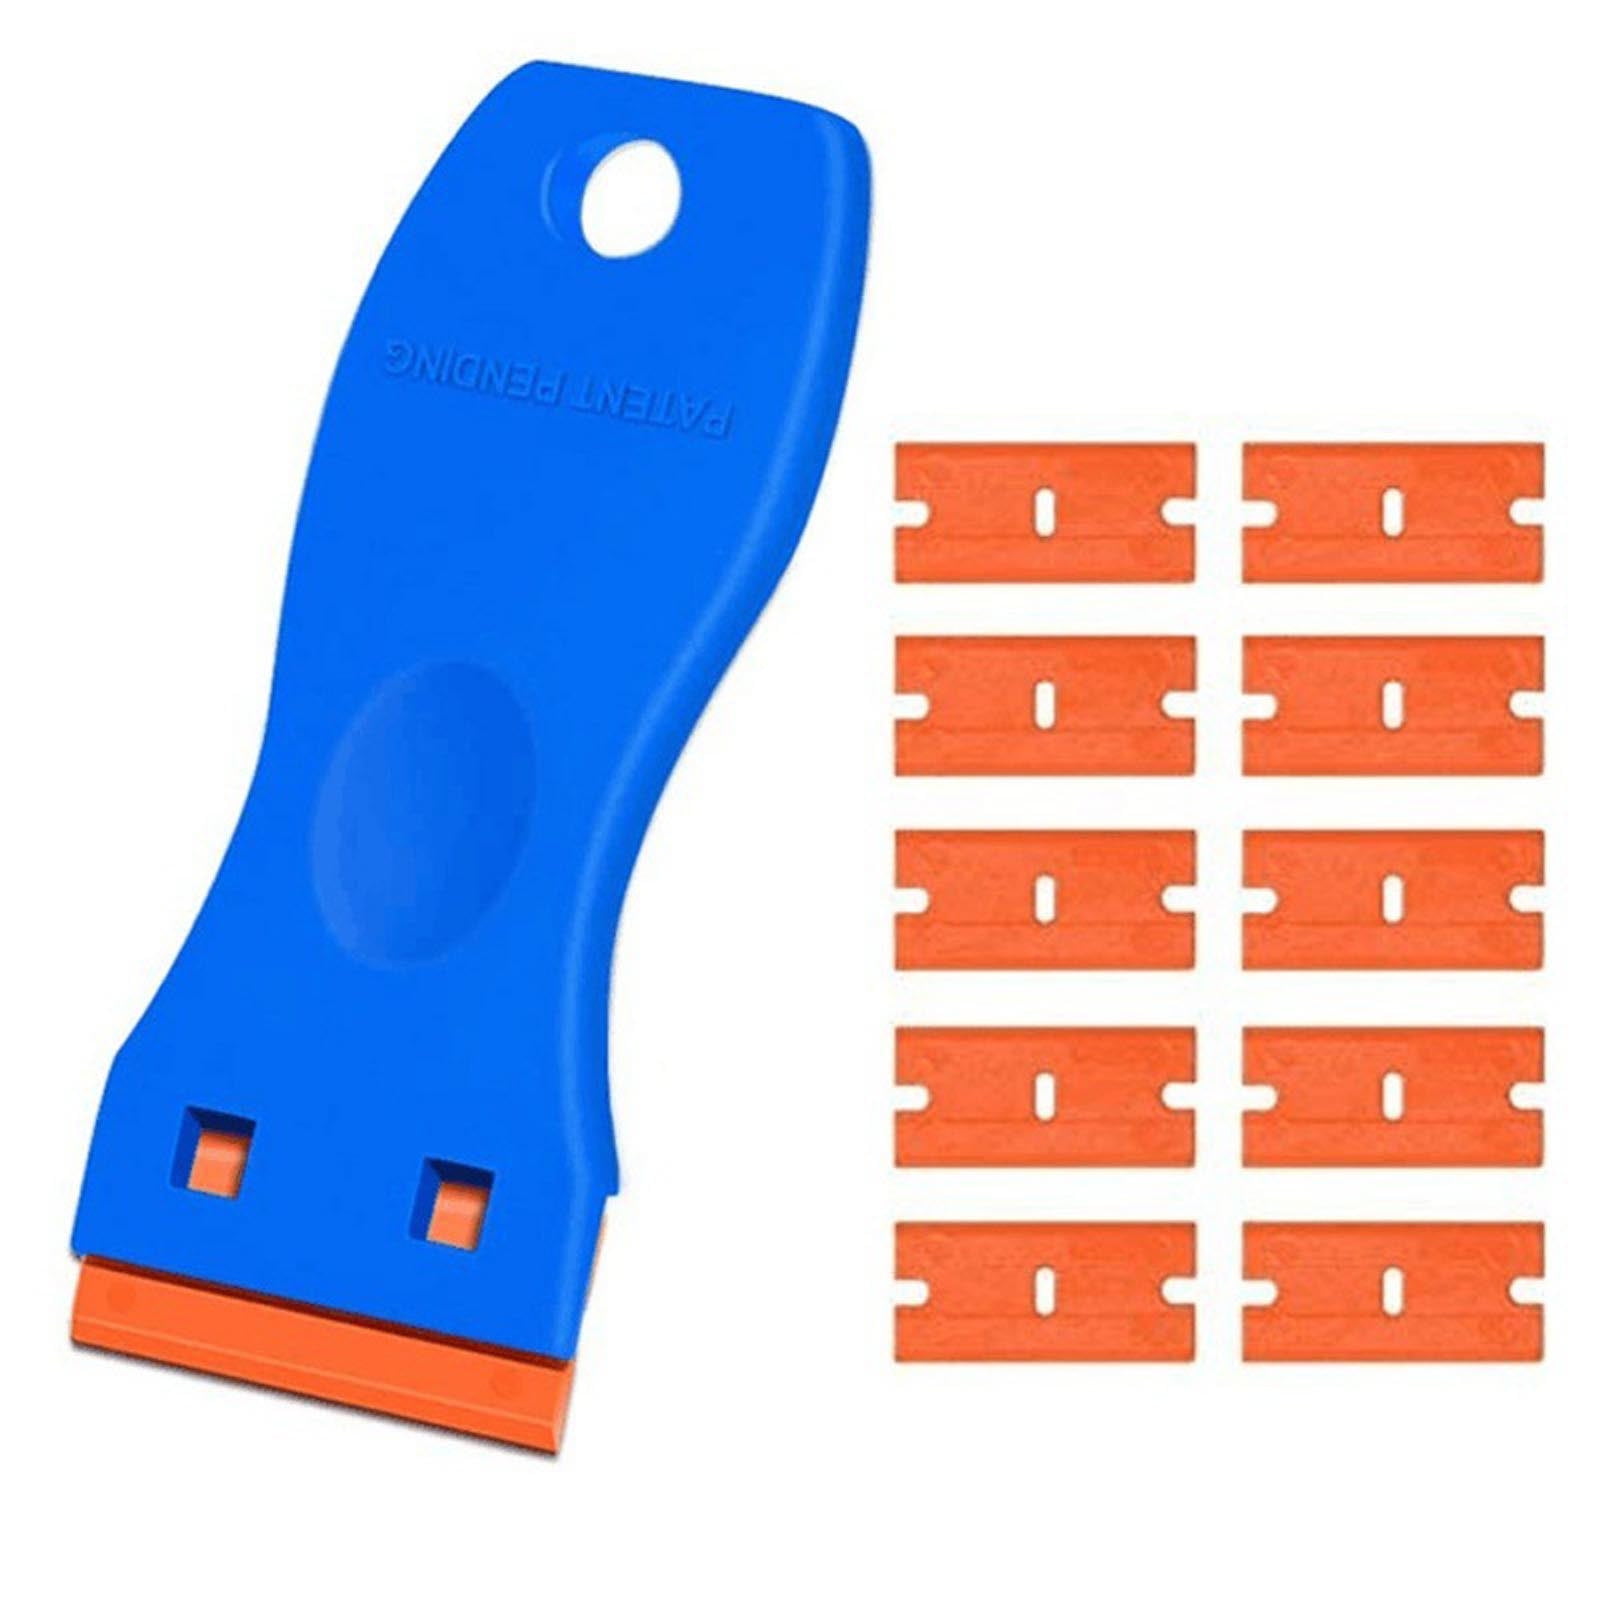 OAVQHLG3B Plastic Razor Blade Scraper,3 Pack Scraper Tool with 30PCS Plastic  Blades,Cleaning Scraper Remover for  Stickers,Decals,Adhesive,Labels,Paint,Glass,Car,Window,Stove Top,Caulk,No  Scratches 